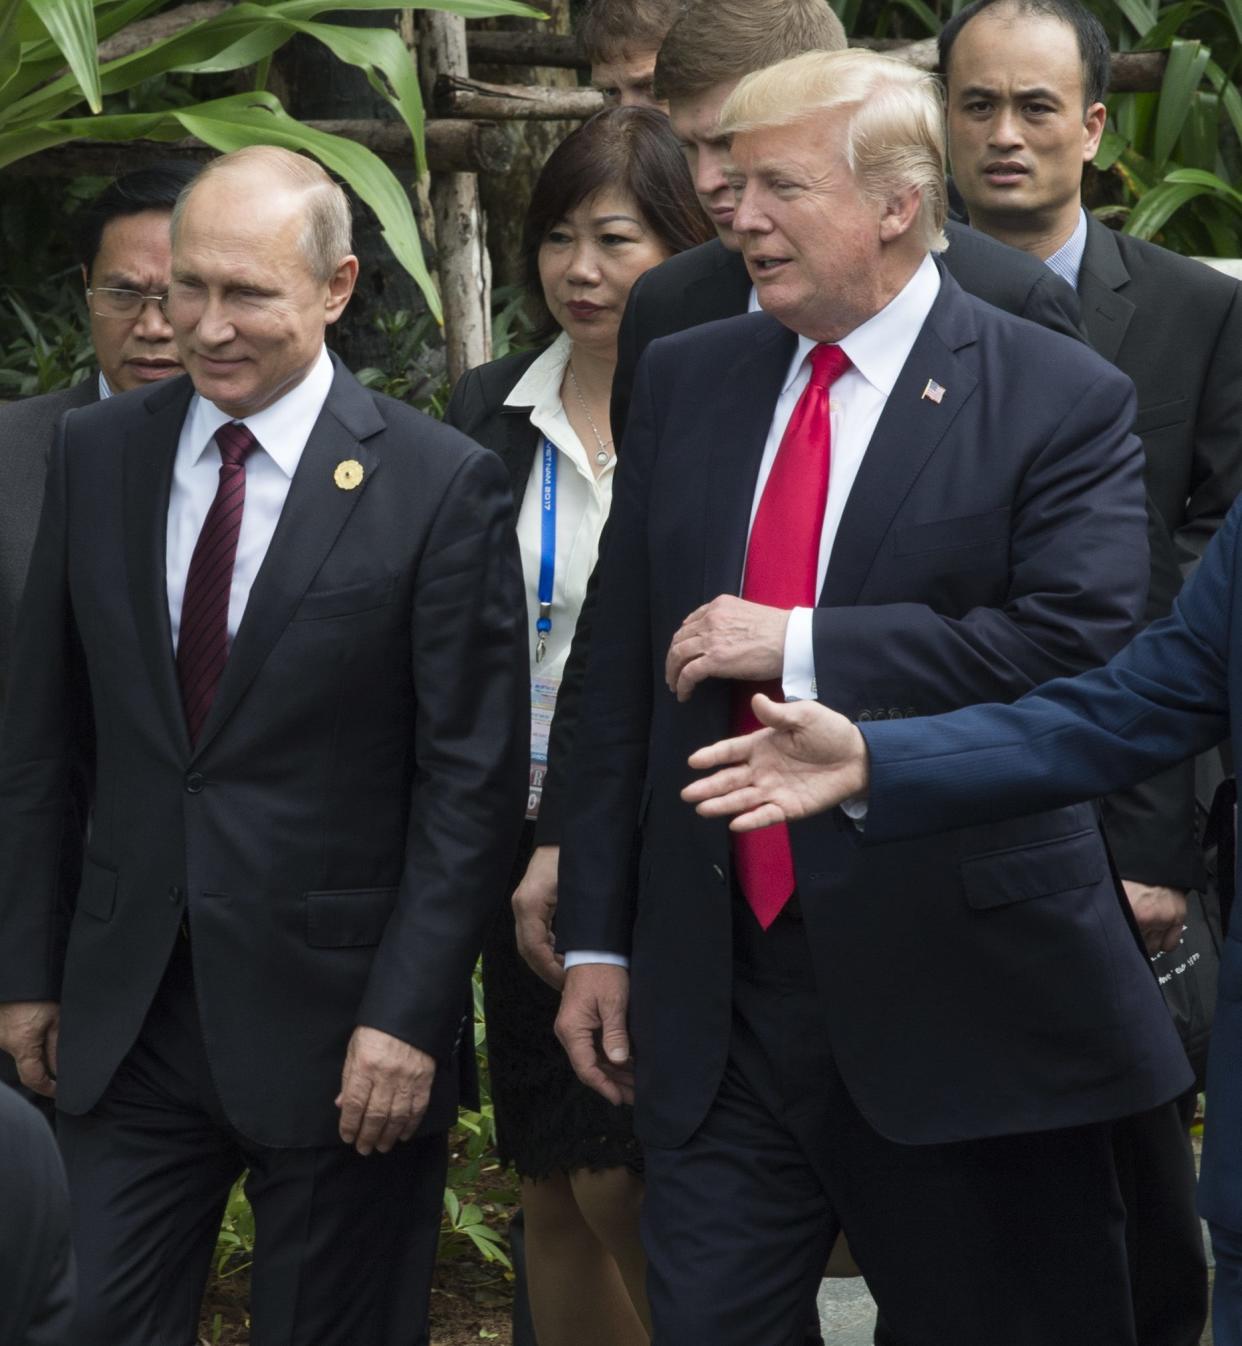 Putin and Trump at the Apec Summit in Vietnam in November (Rex)